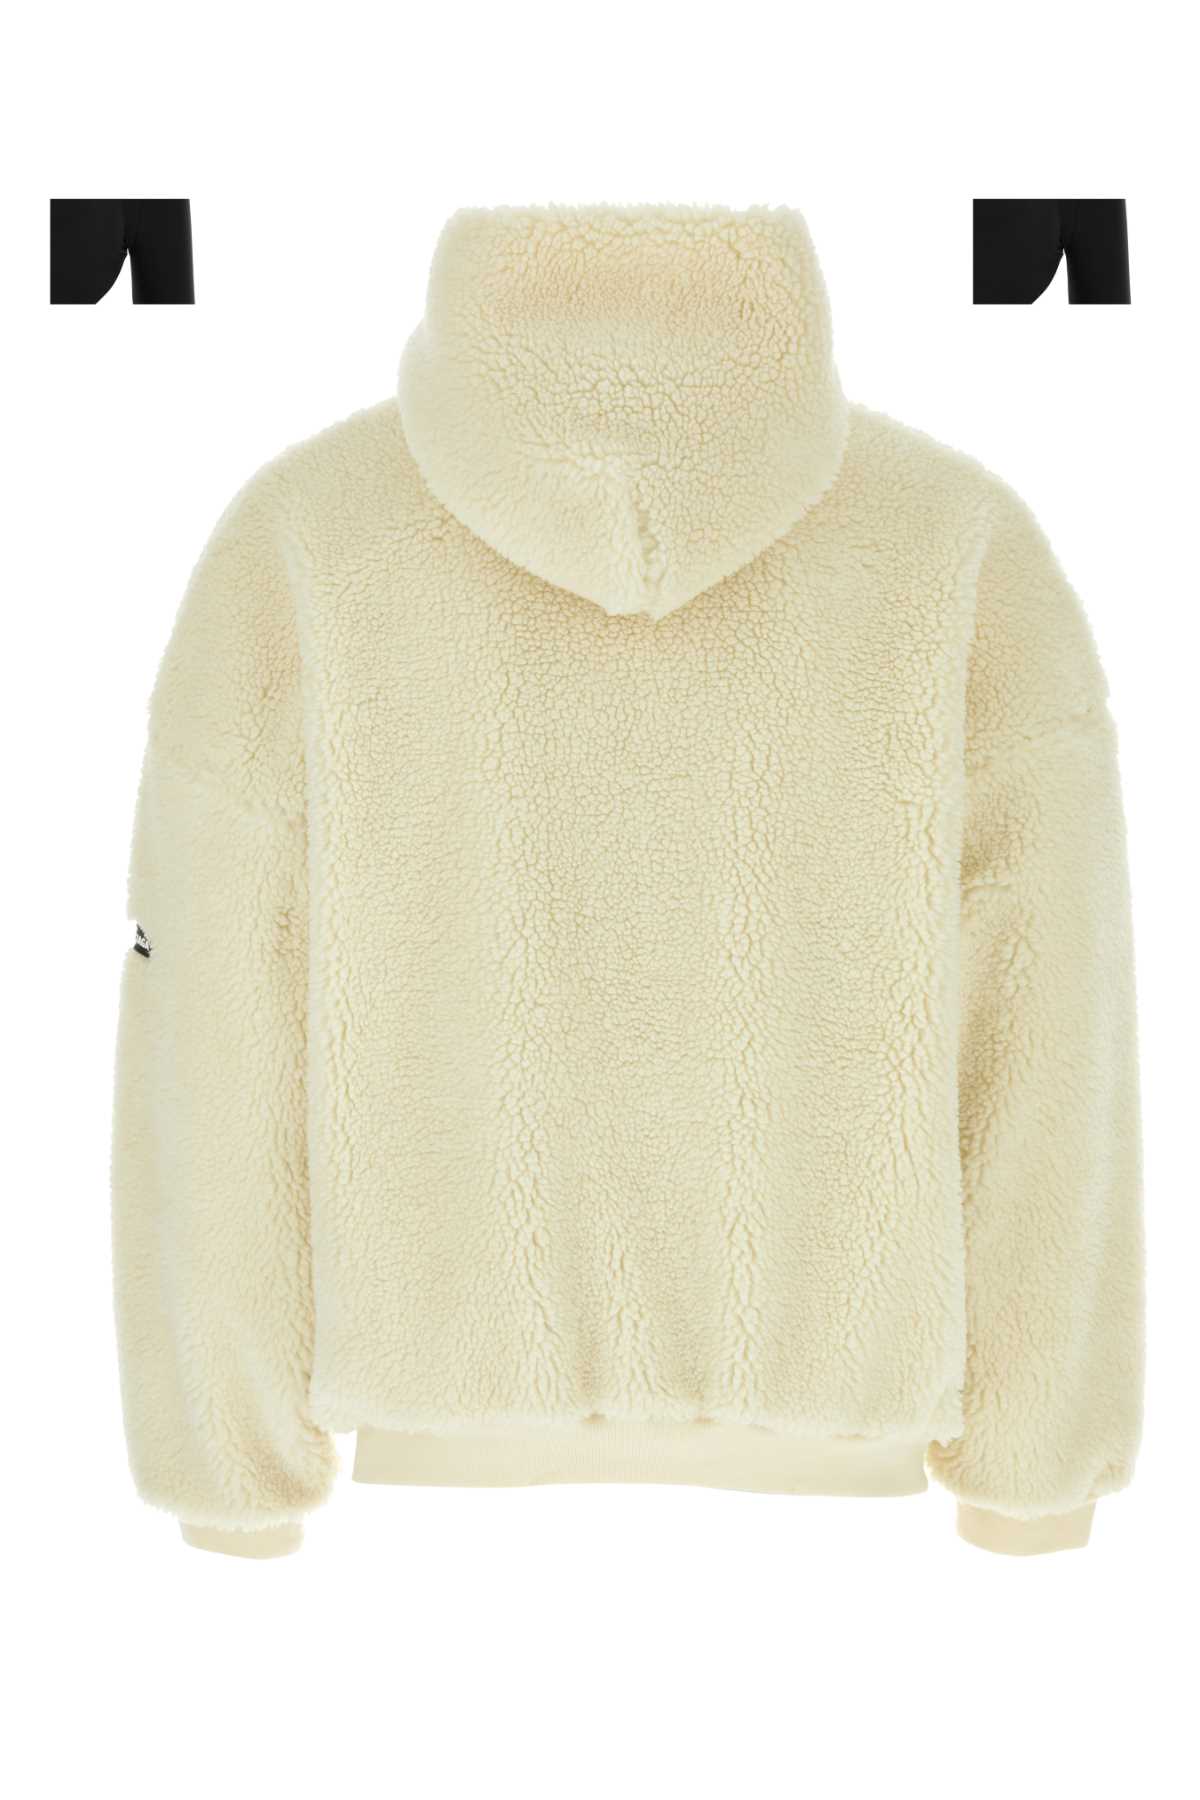 Shop Balenciaga Ivory Teddy Oversize Sweatshirt